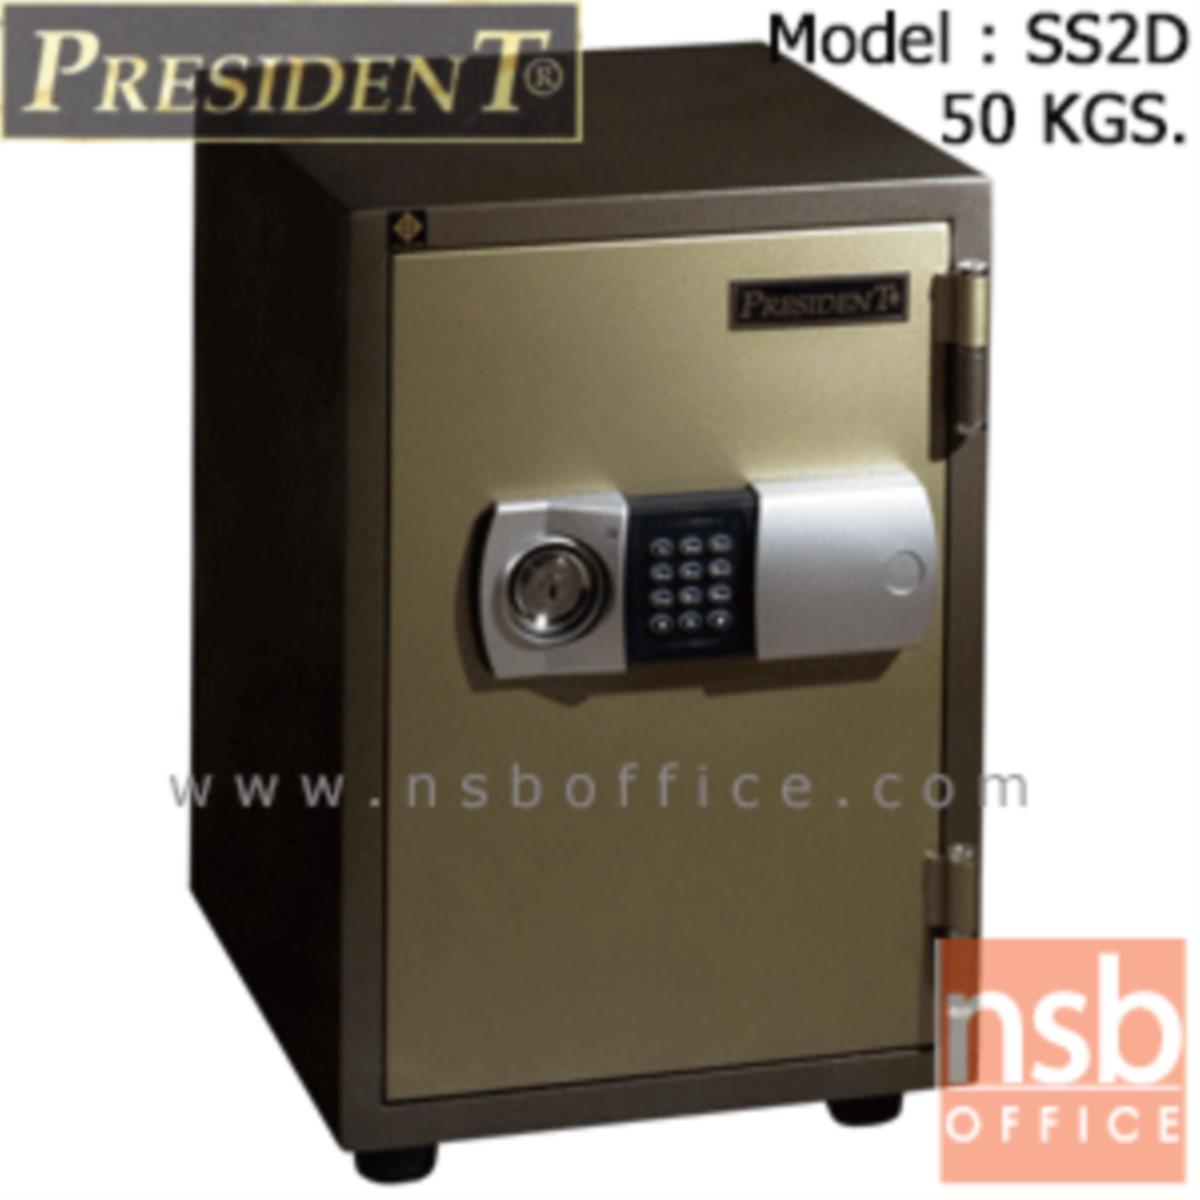 F05A023:ตู้เซฟนิรภัยชนิดดิจิตอล 50 กก.  รุ่น PRESIDENT-SS2D มี 1 กุญแจ 1 รหัส (รหัสใช้กดหน้าตู้)